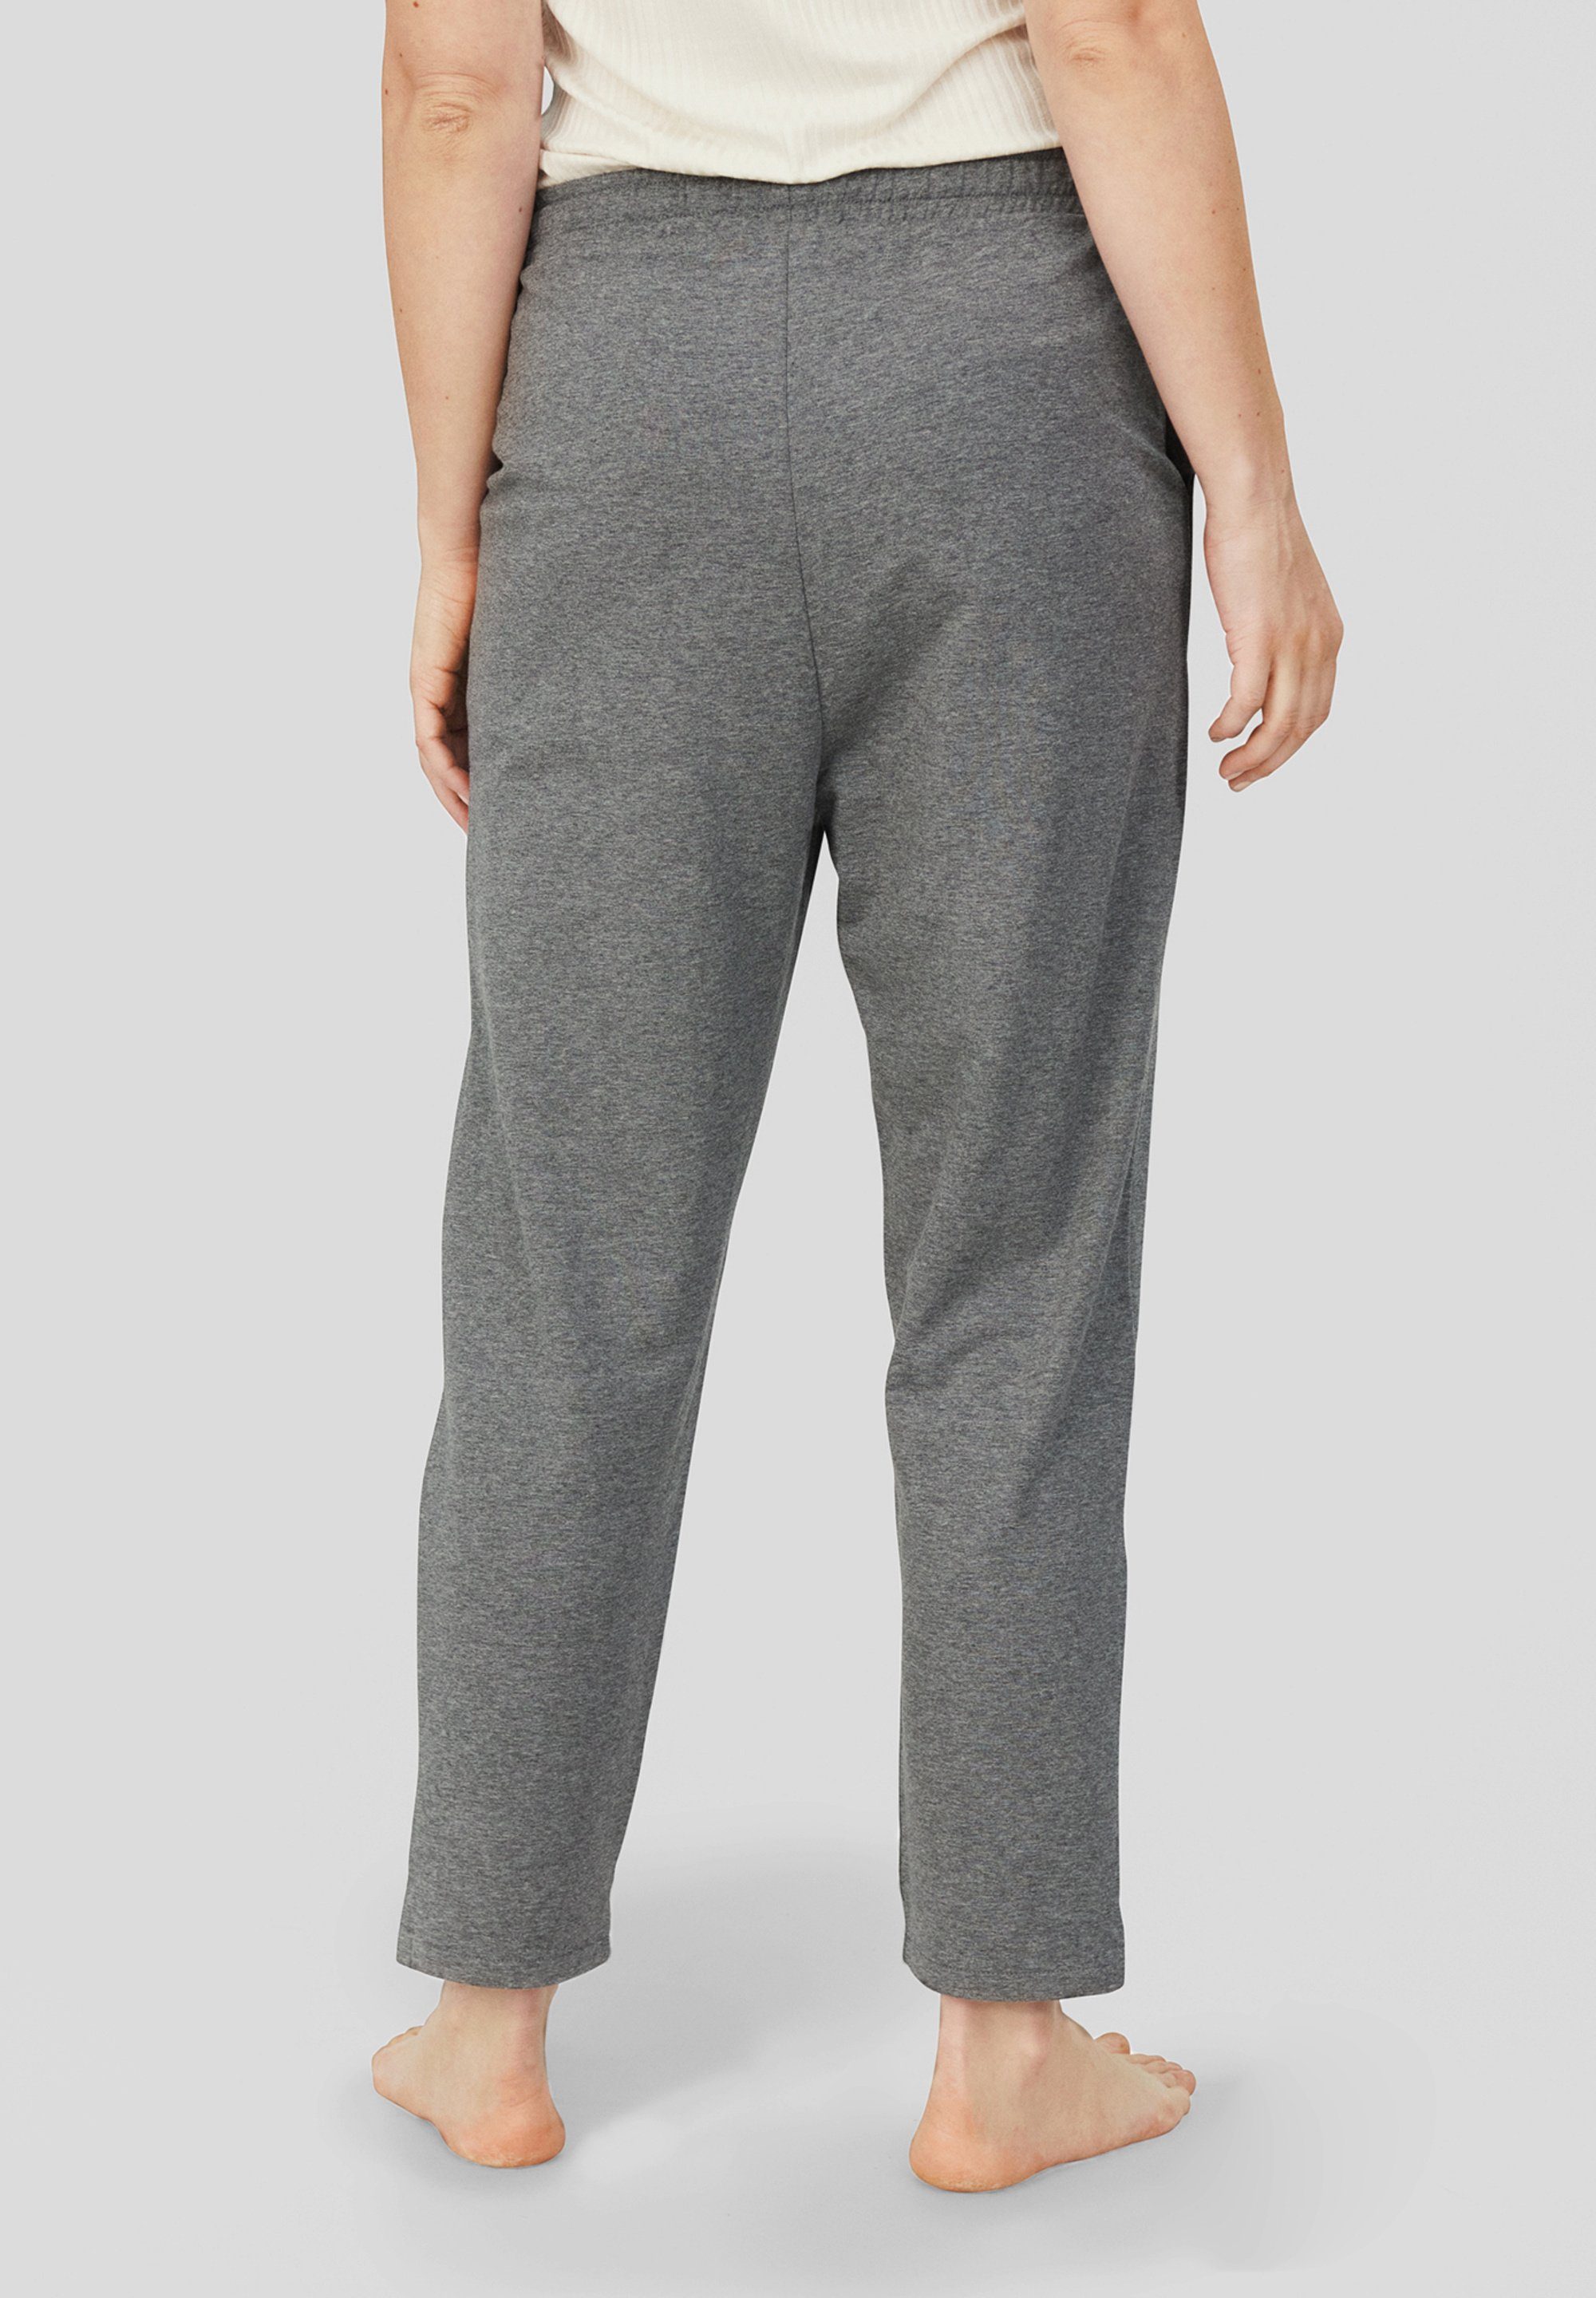 Masai Jogginghose MaPetrasia Loose, Homewear, Sportlich grey Jersey